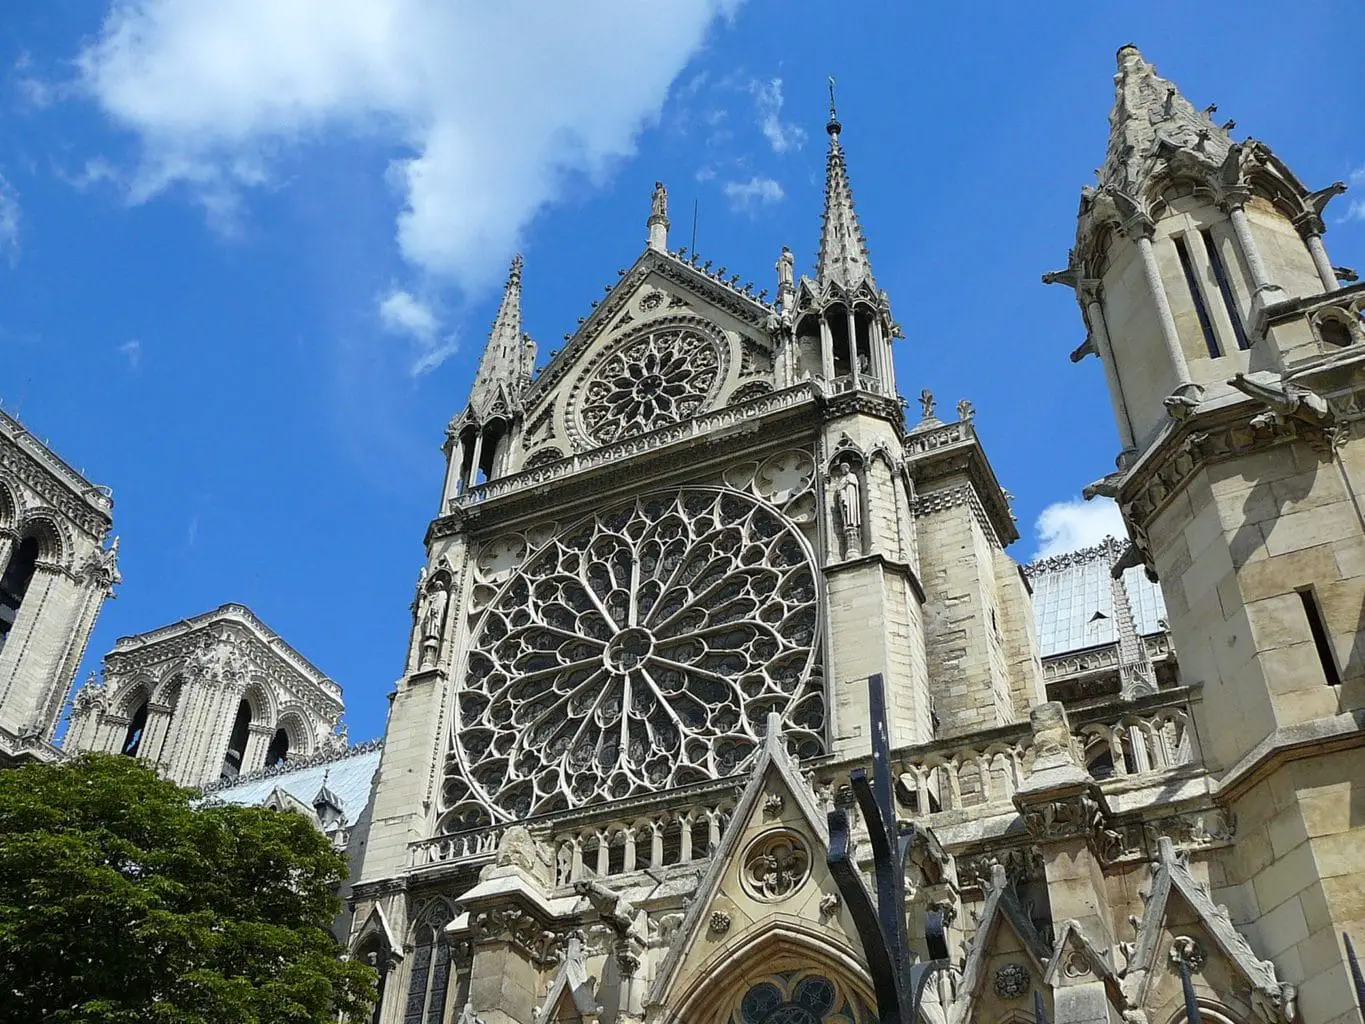 Landmarks in France - Notre Dame